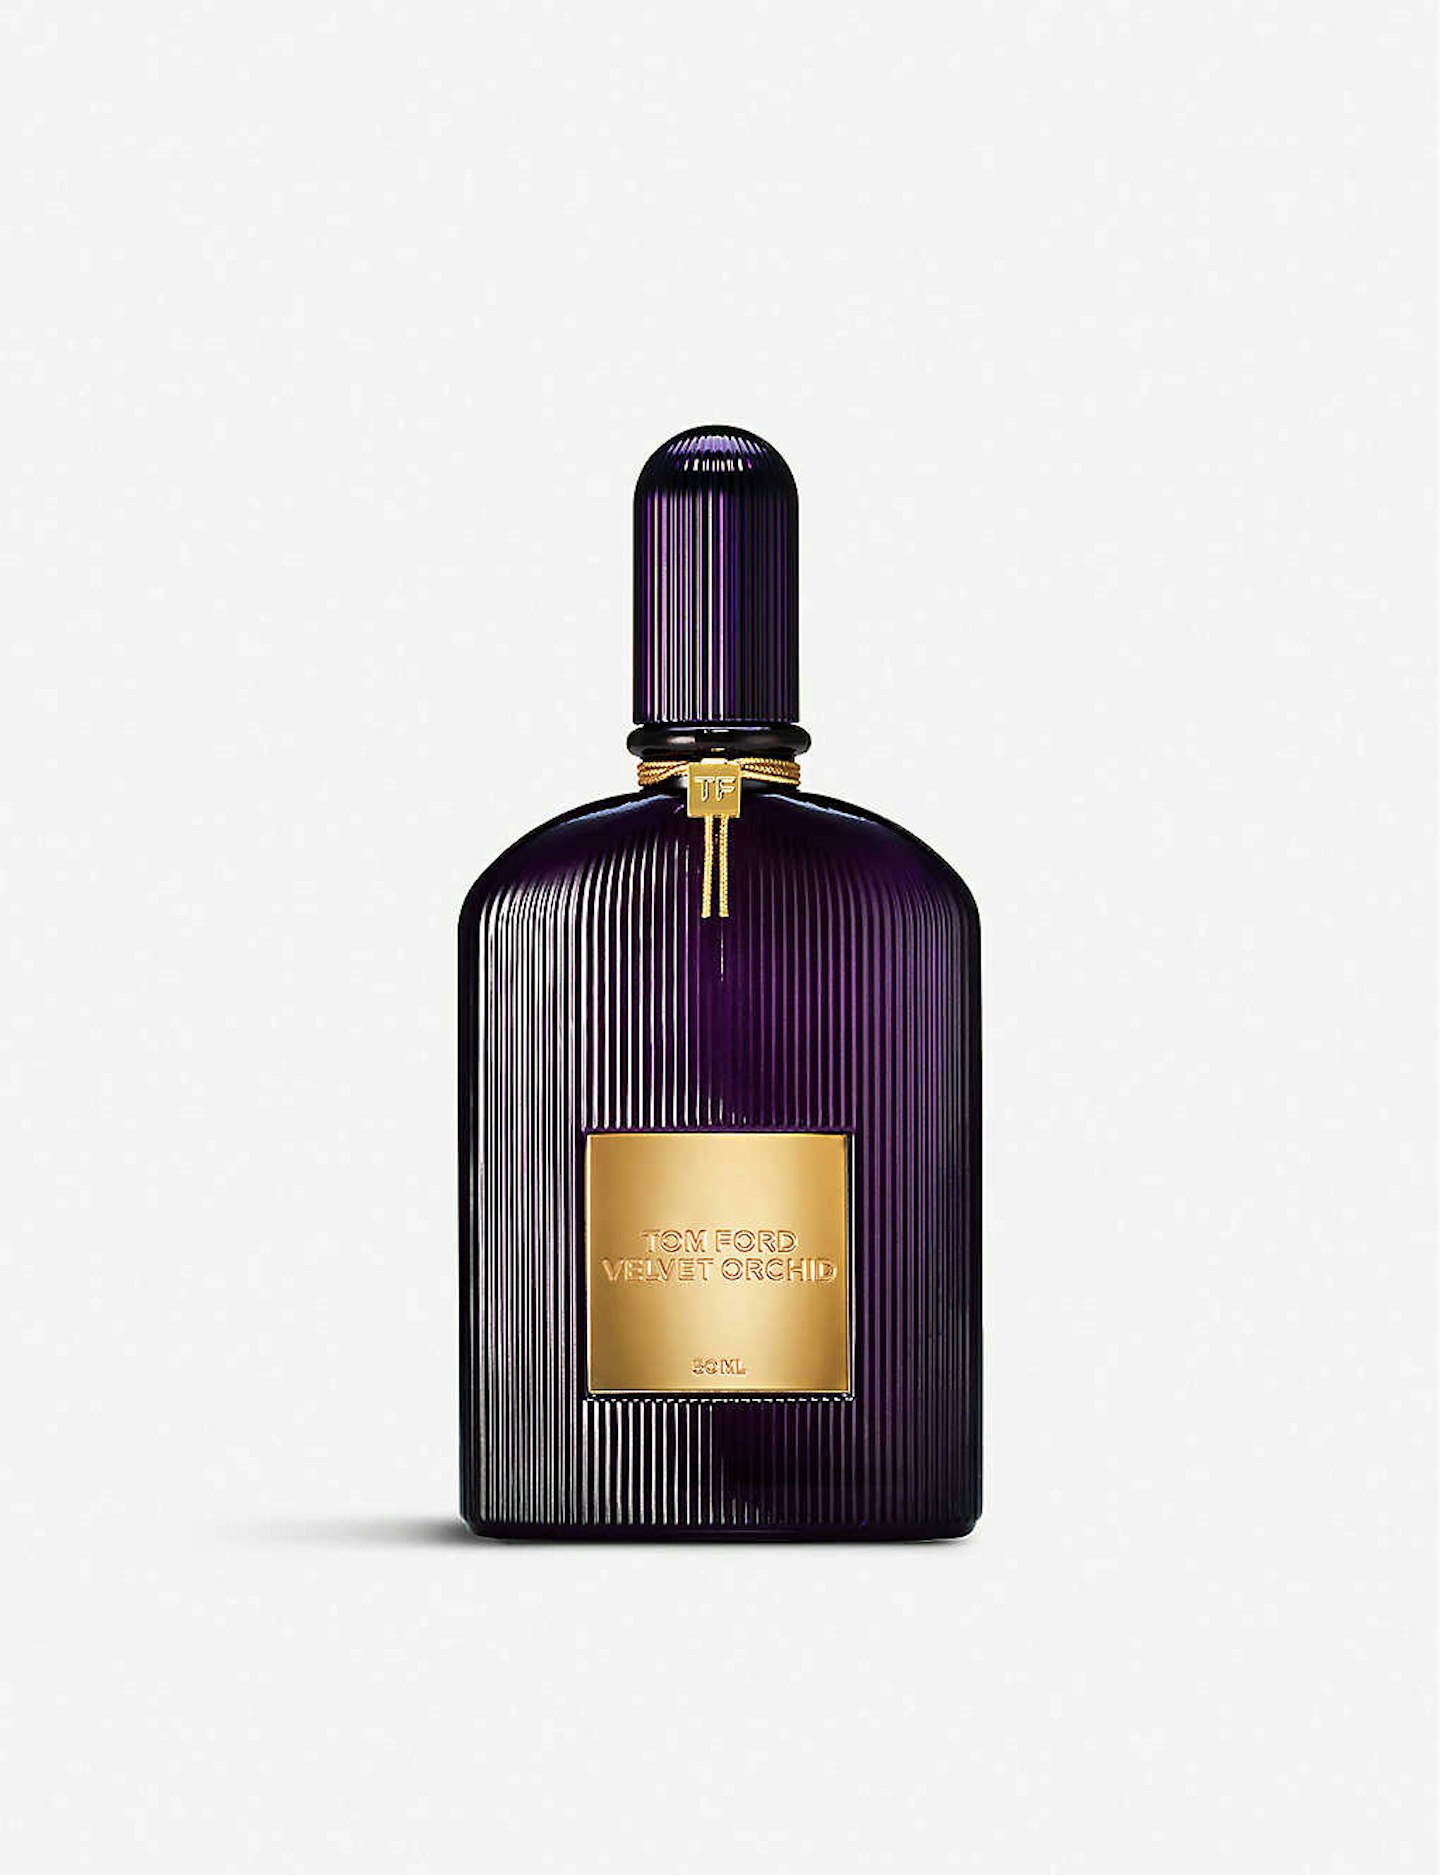 SHOP: Molly-Mae Hagueu2019s Latest Perfume Picks